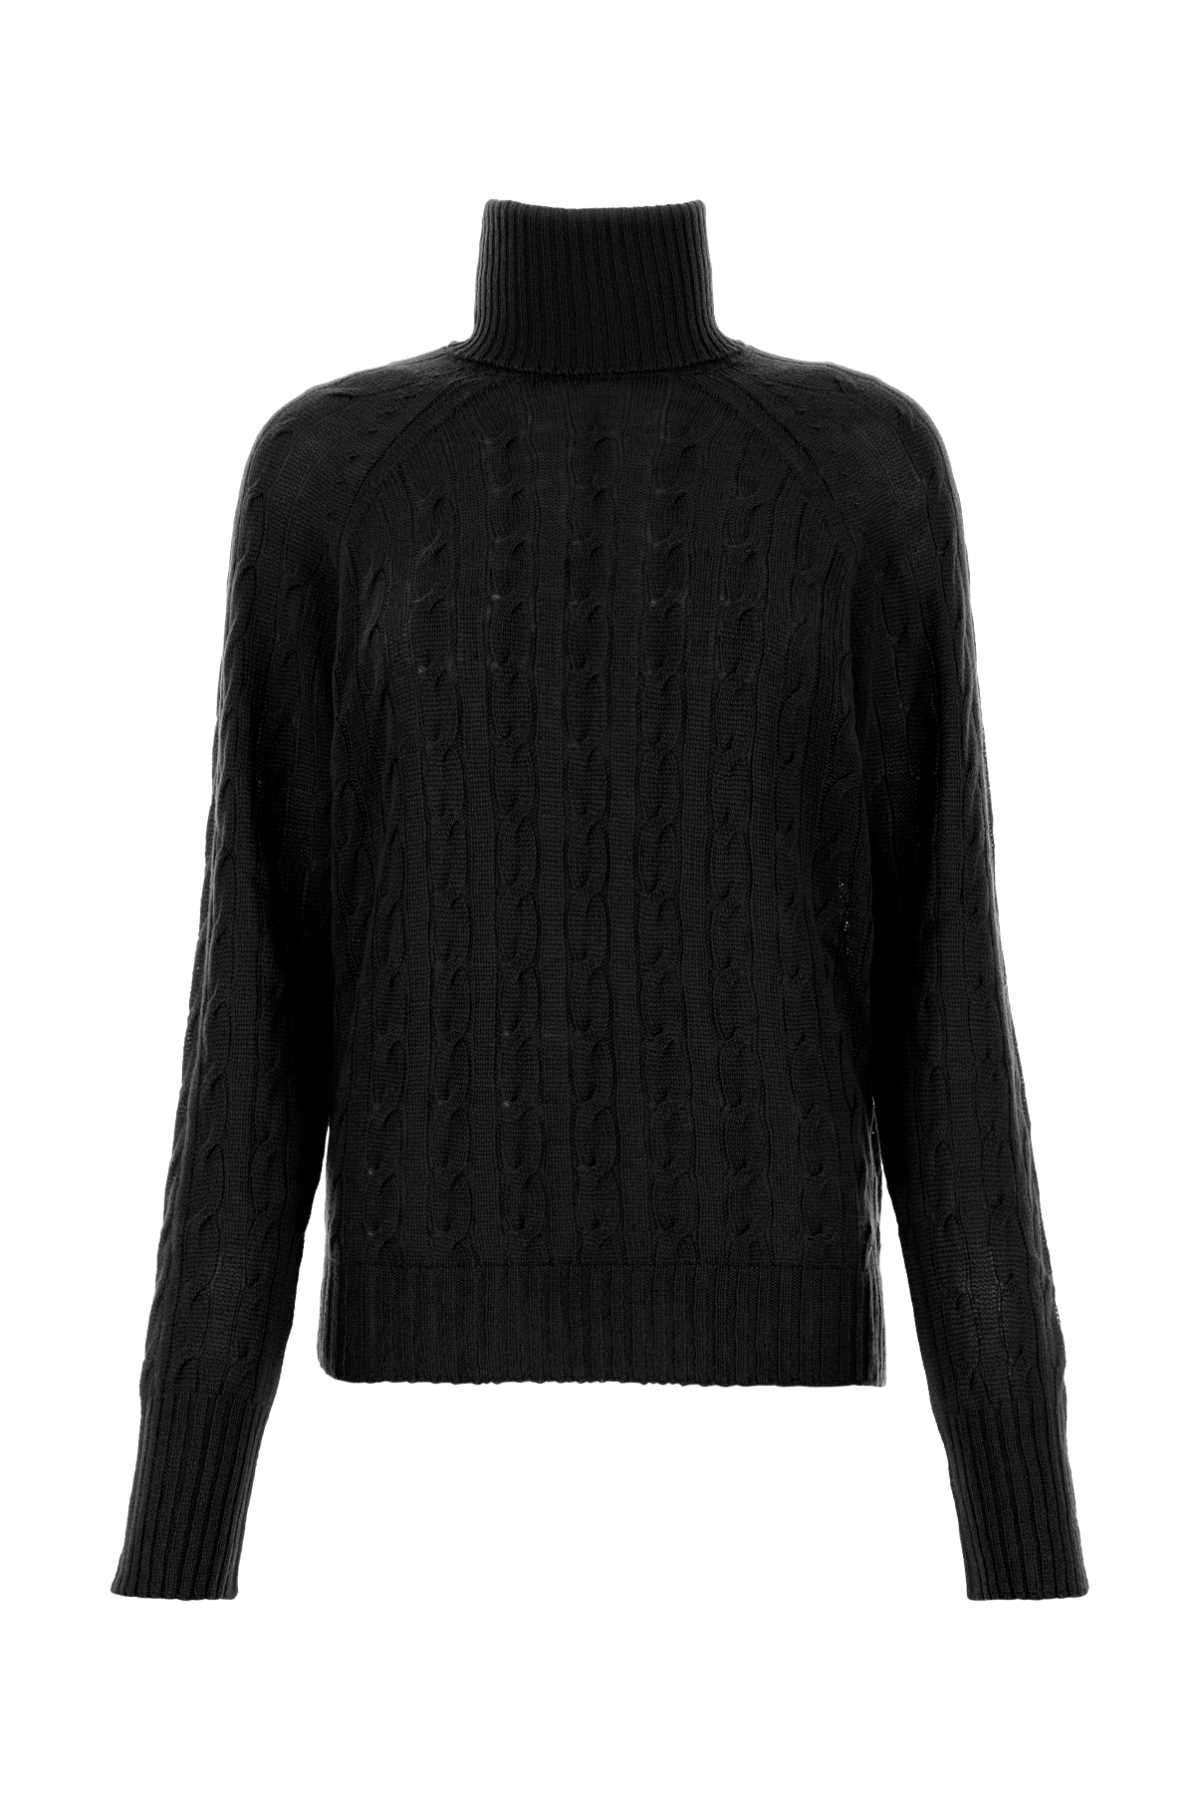 Shop Etro Black Cashmere Sweater